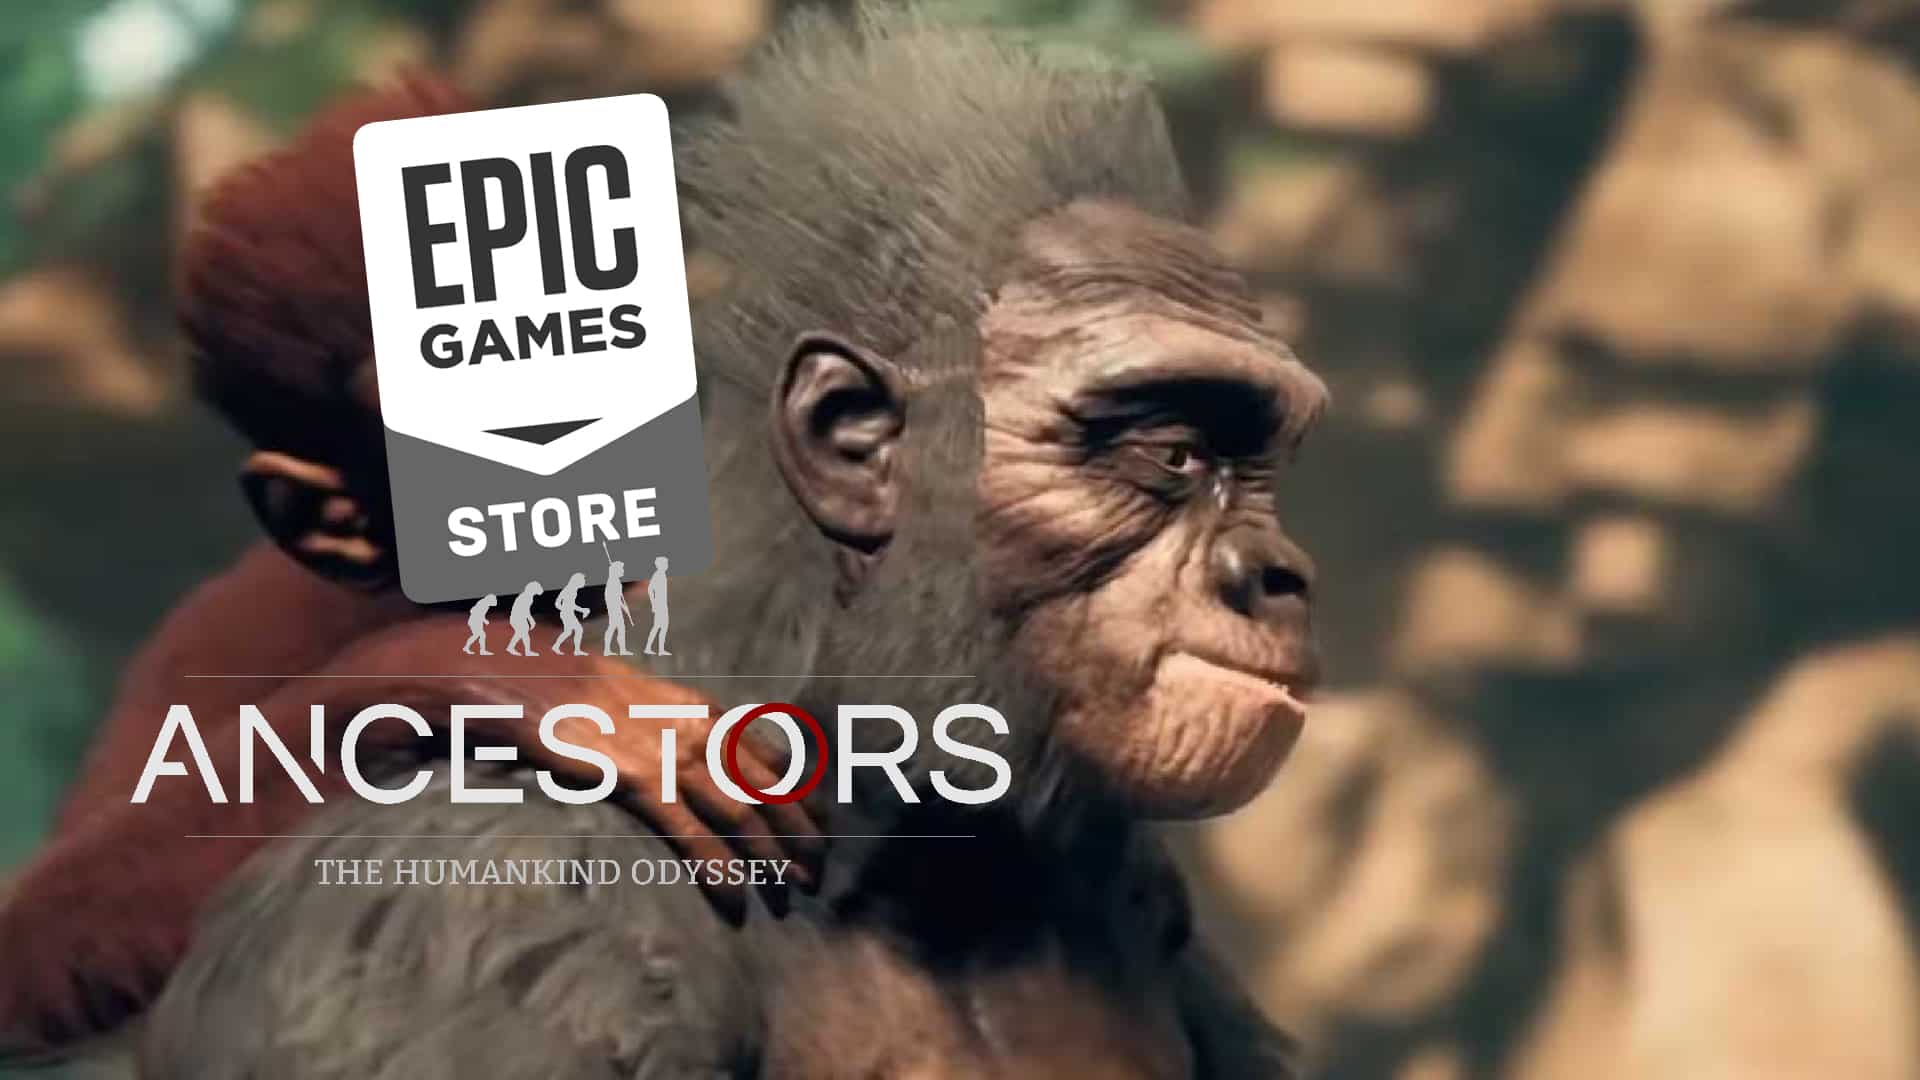 epic games store ancestors